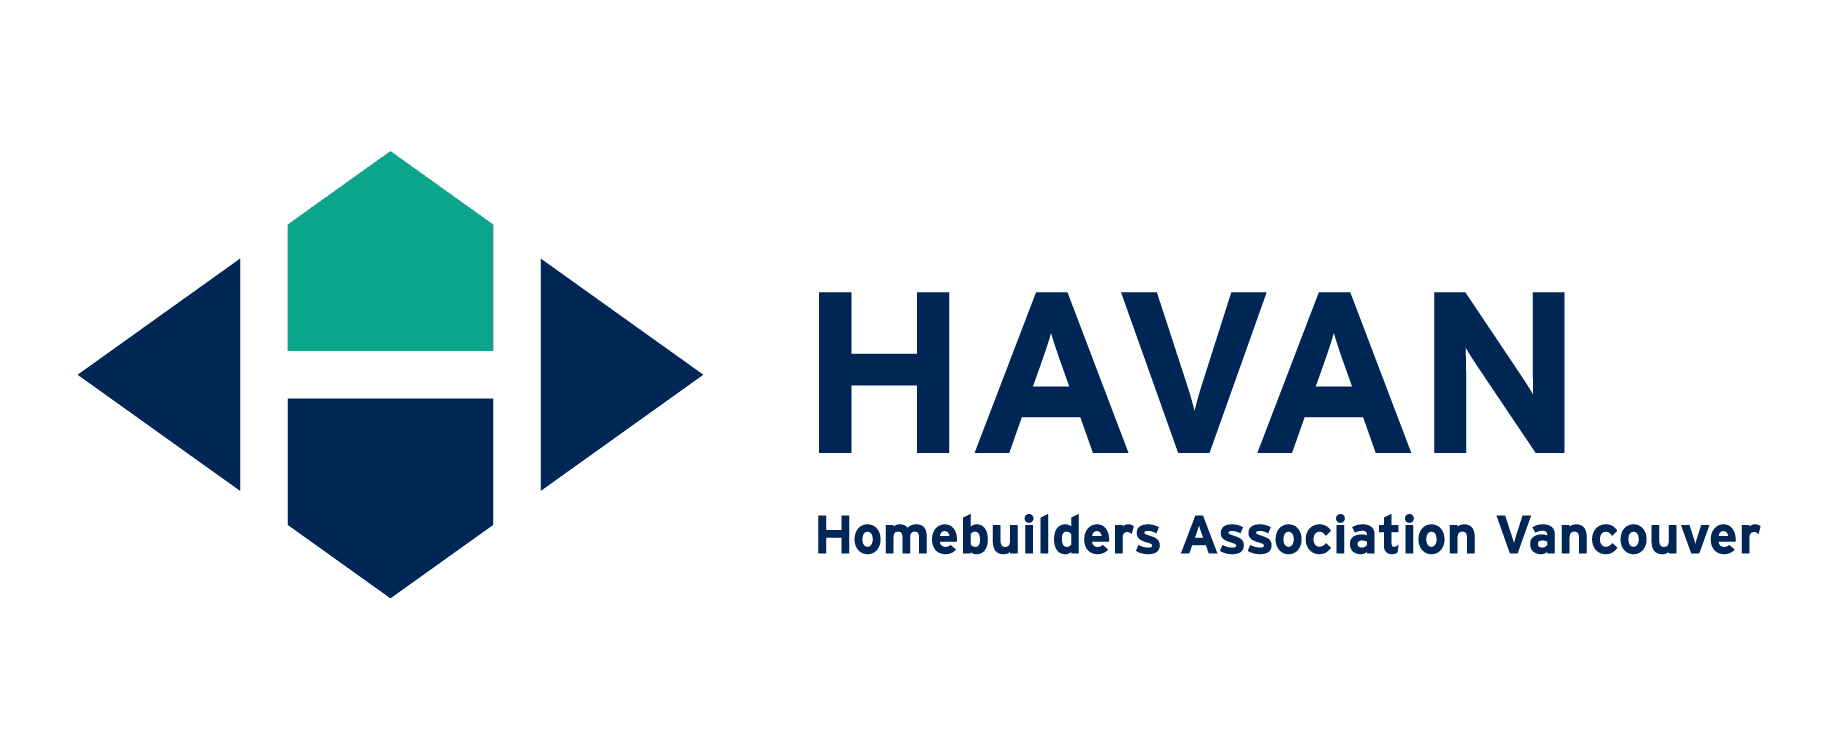 HAVAN logo